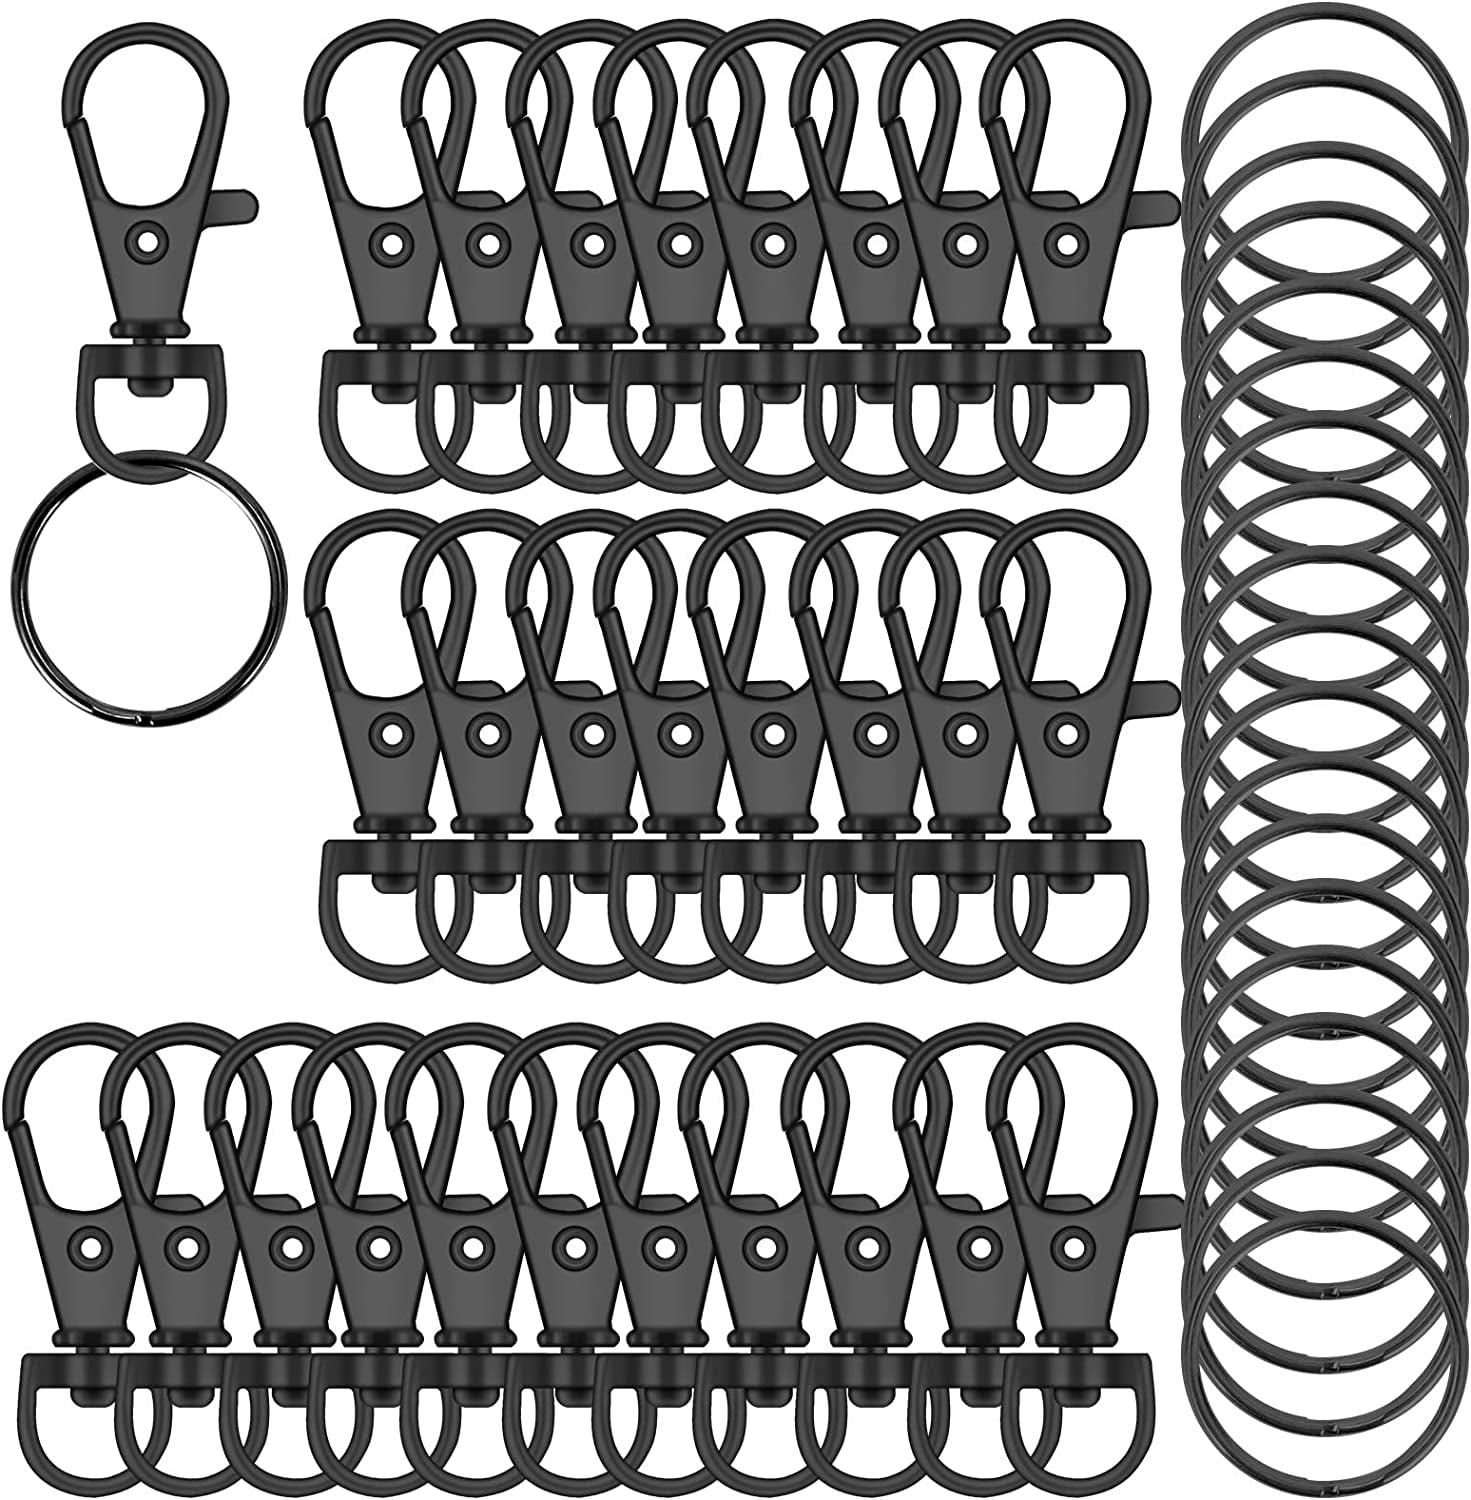 Oubaka 150pcs Heart-Shaped Swivel Snap Hook Set,Metal Spring Snap Keychain Clip Keychain Hook Lobster Clasp Split Key Rings with Chain&Jump Rings Bulk